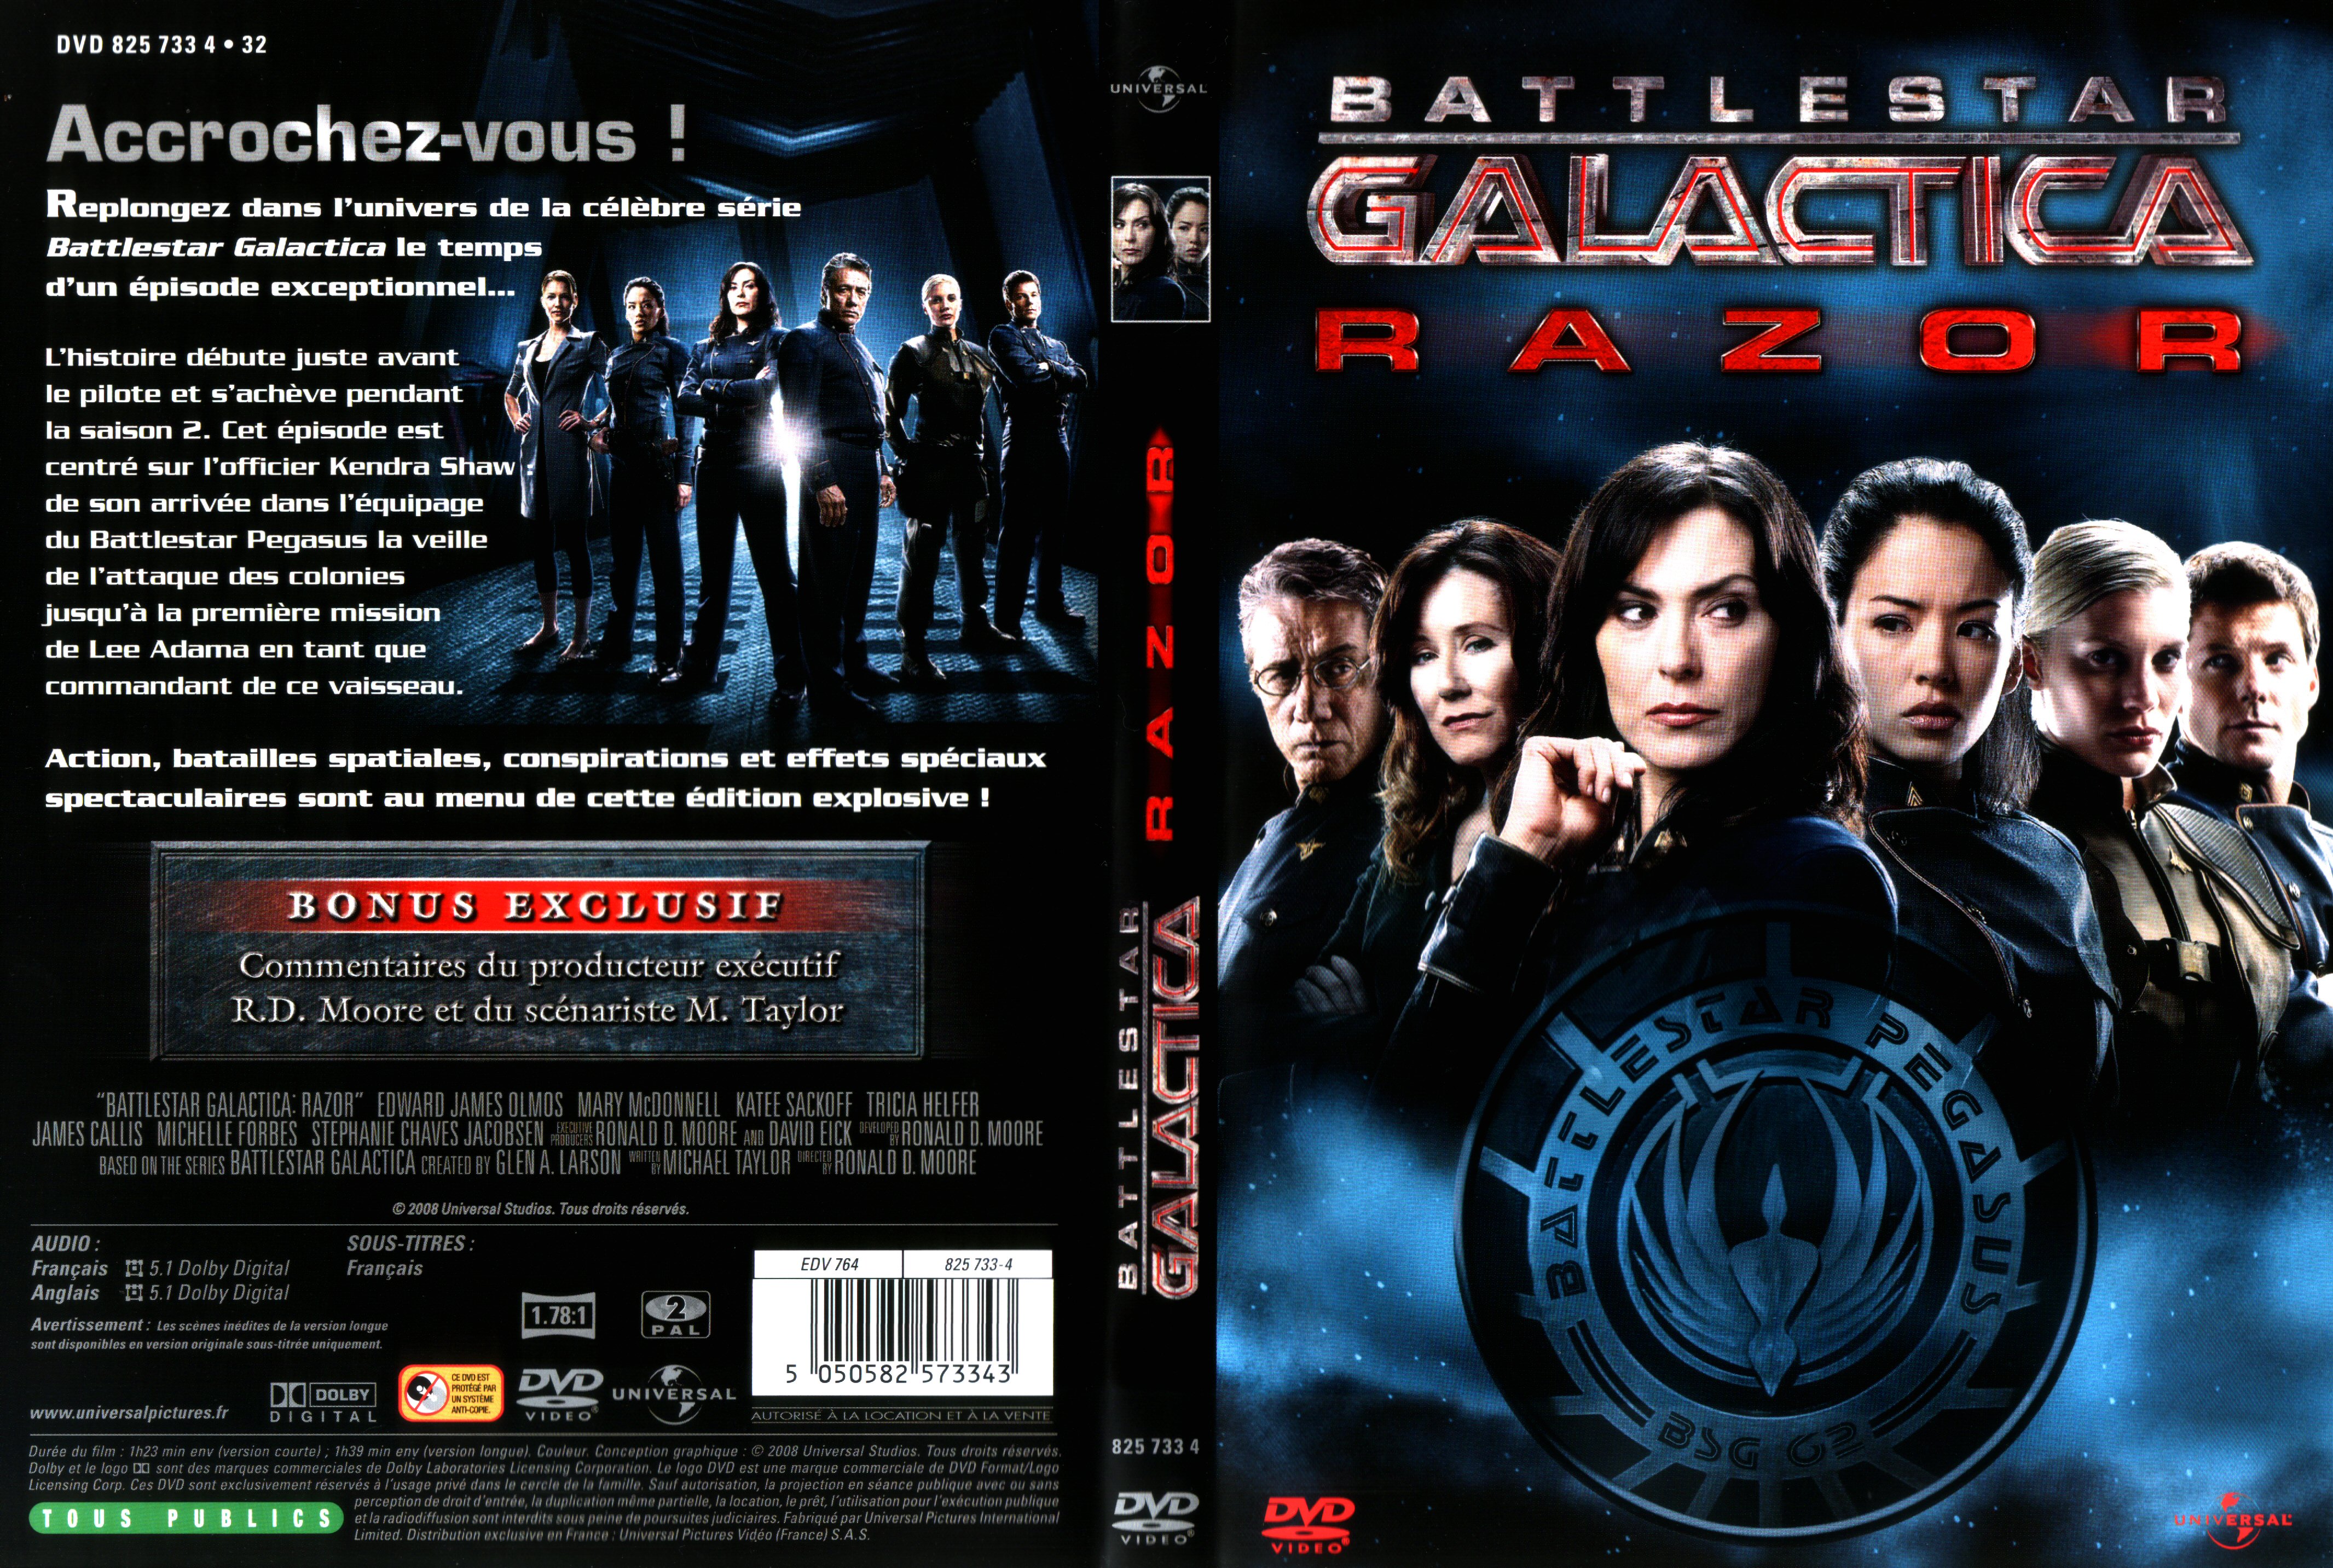 Jaquette DVD Battlestar galactica - Razor